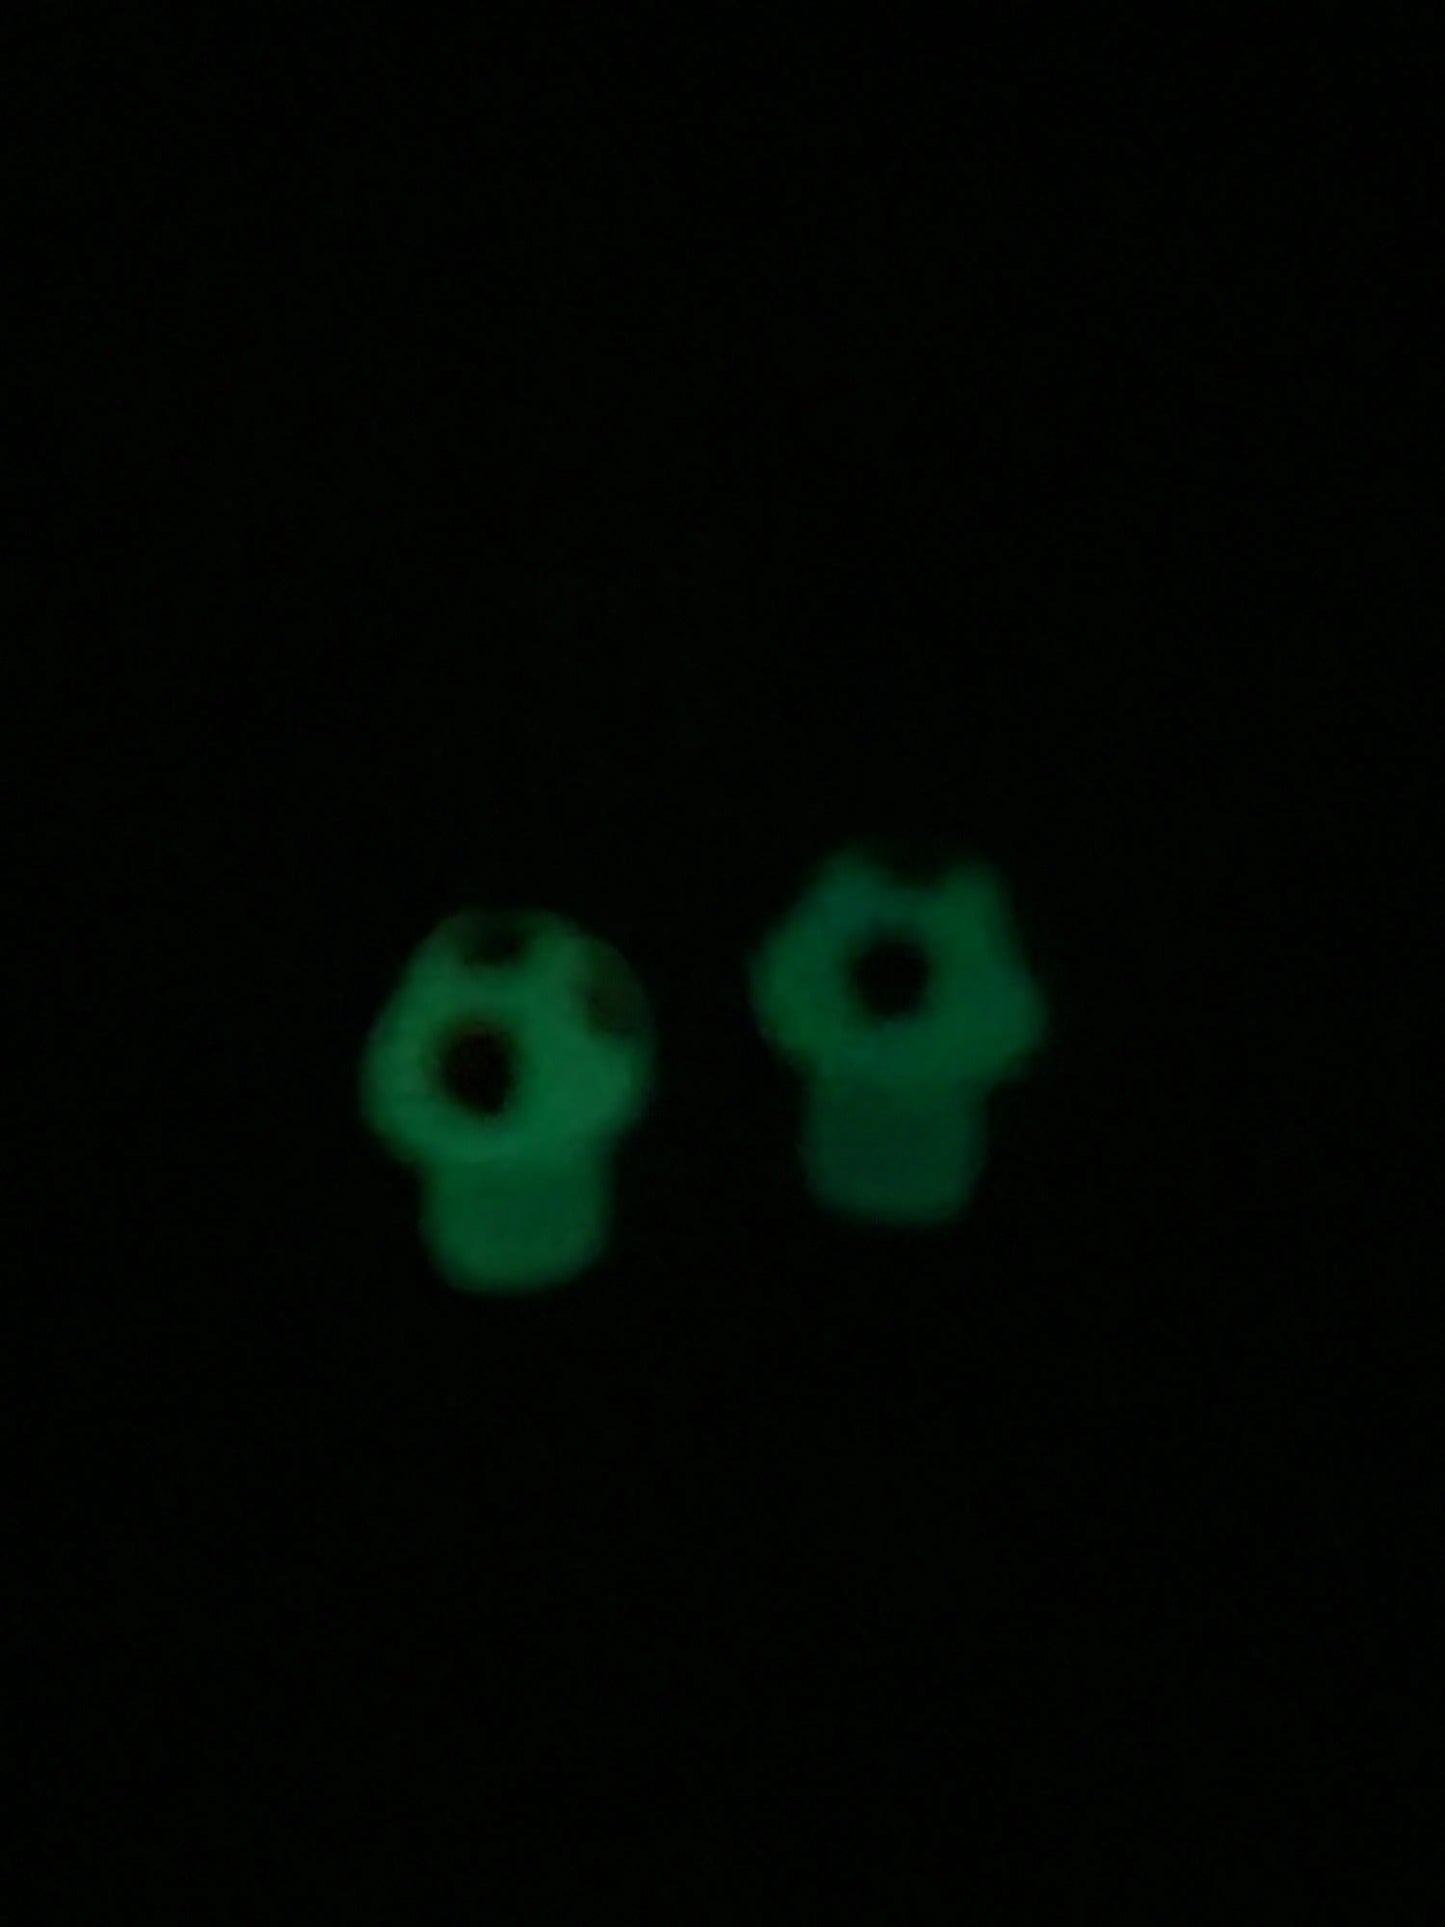 Glow in the dark mushroom earrings - Bead From The Heart Creations